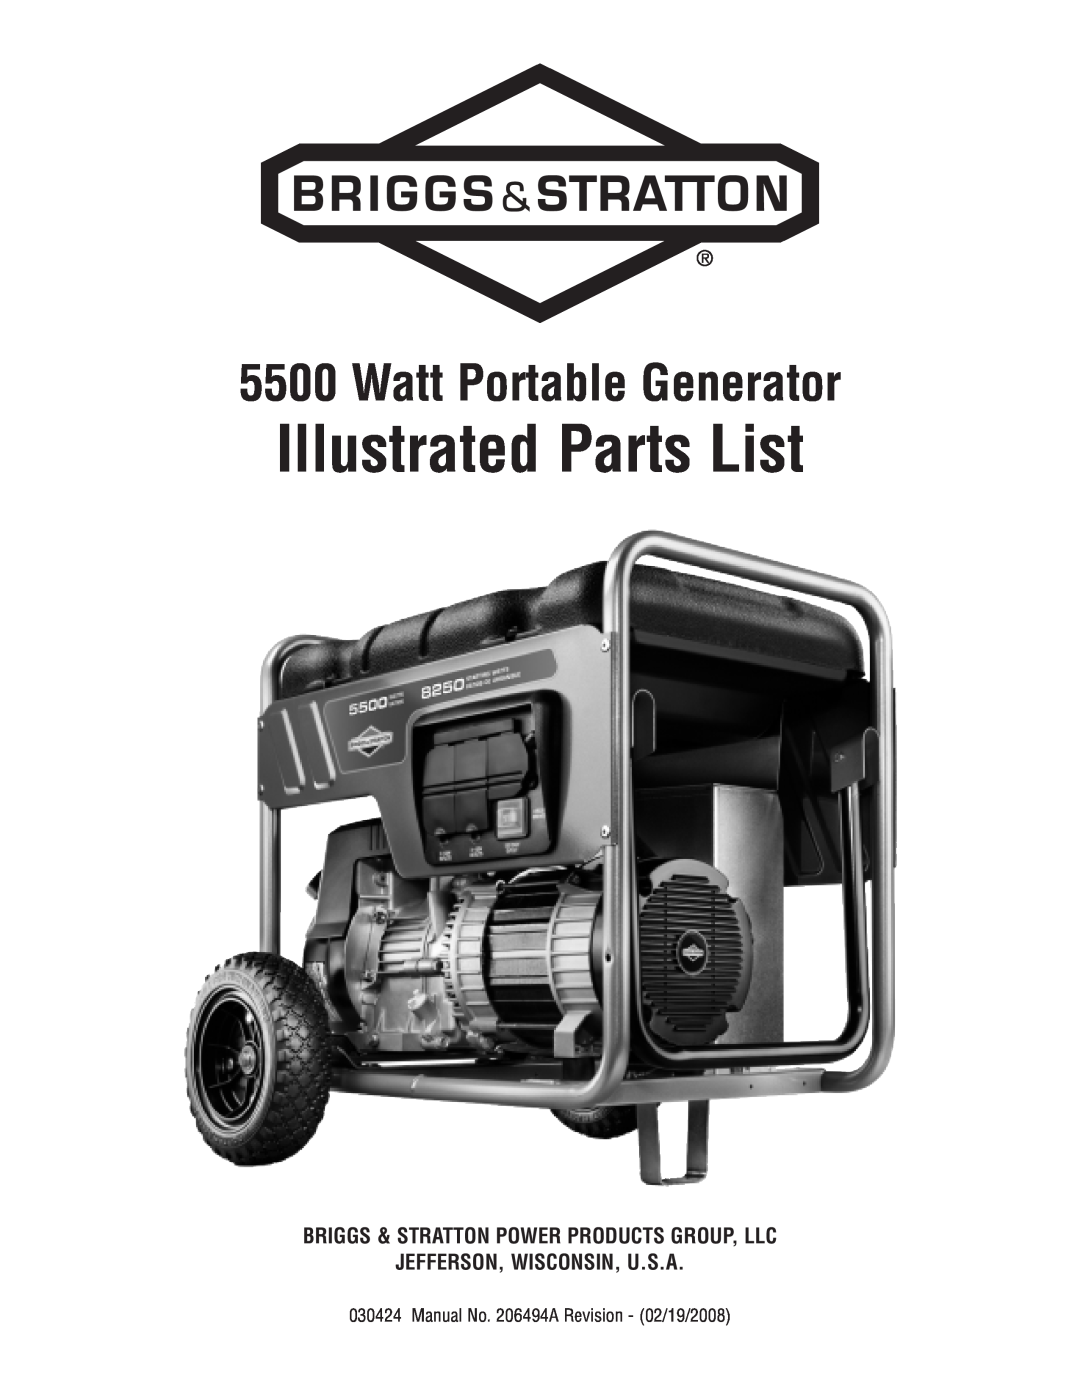 Briggs & Stratton 30424 manual Illustrated Parts List, Watt Portable Generator, Jefferson, Wisconsin, U.S.A 